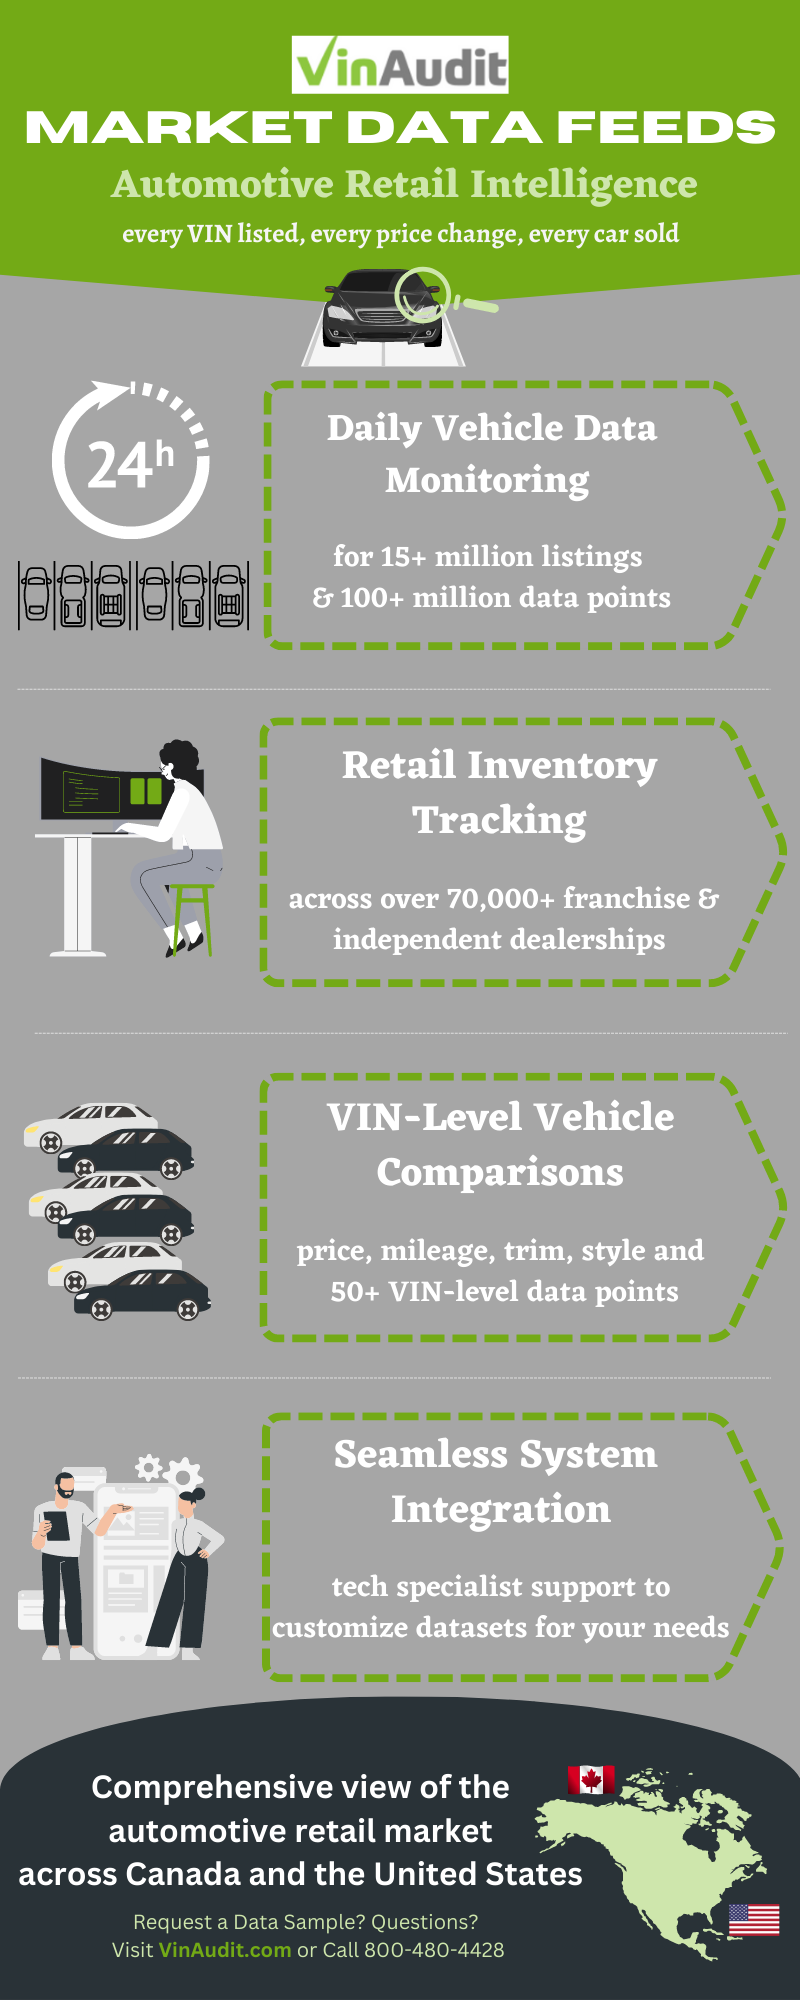 VINAudit Market Data Feeds: Most Comprehensive Automotive Retail Intelligence